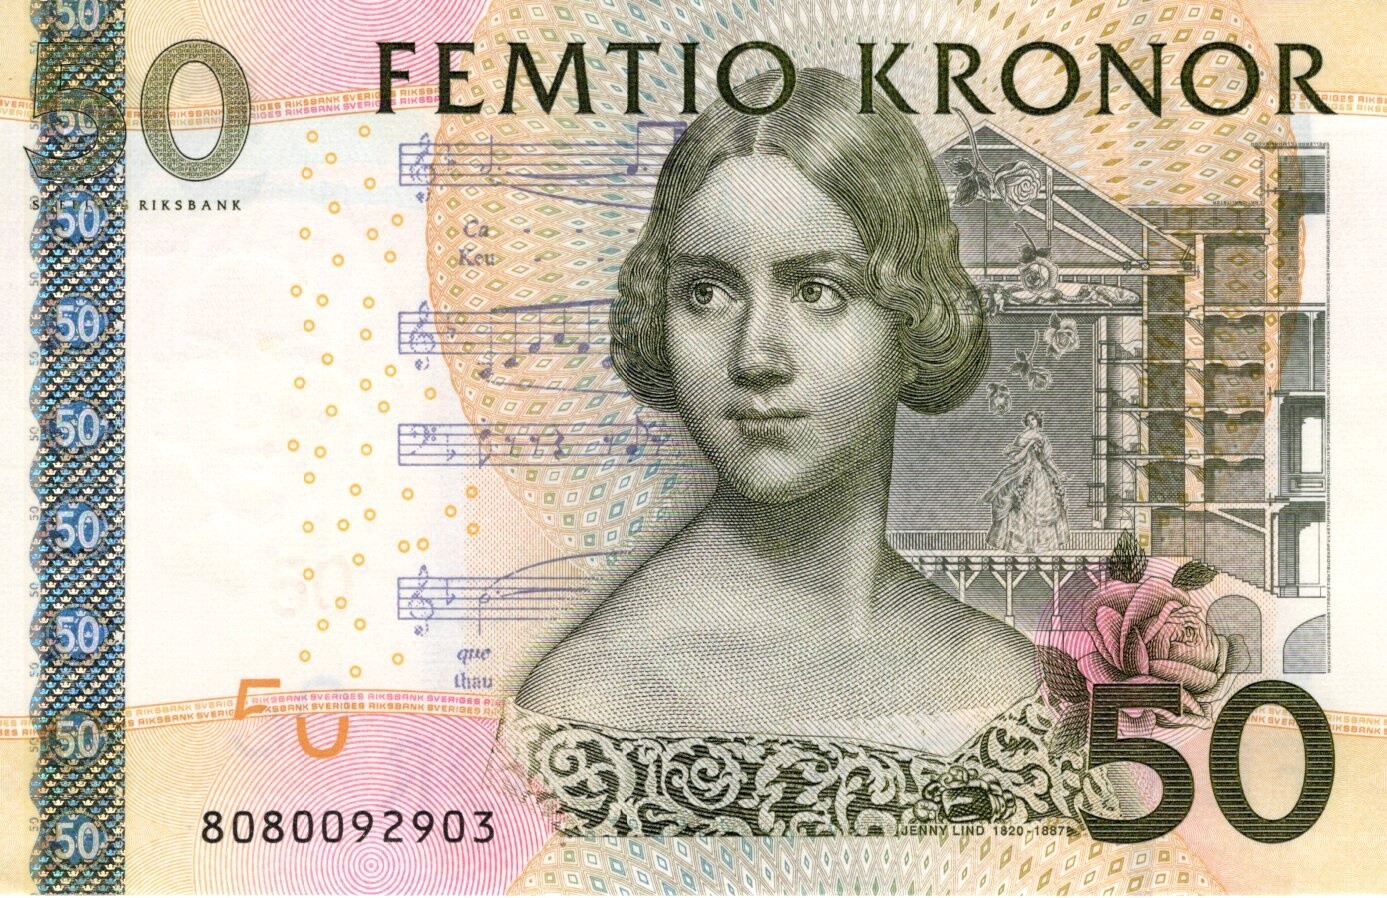 Sweden 50 Kronor 2008 aUNC Banknote P-64b Prefix 8080 Gernandt/Ingves Sig. Paper Money